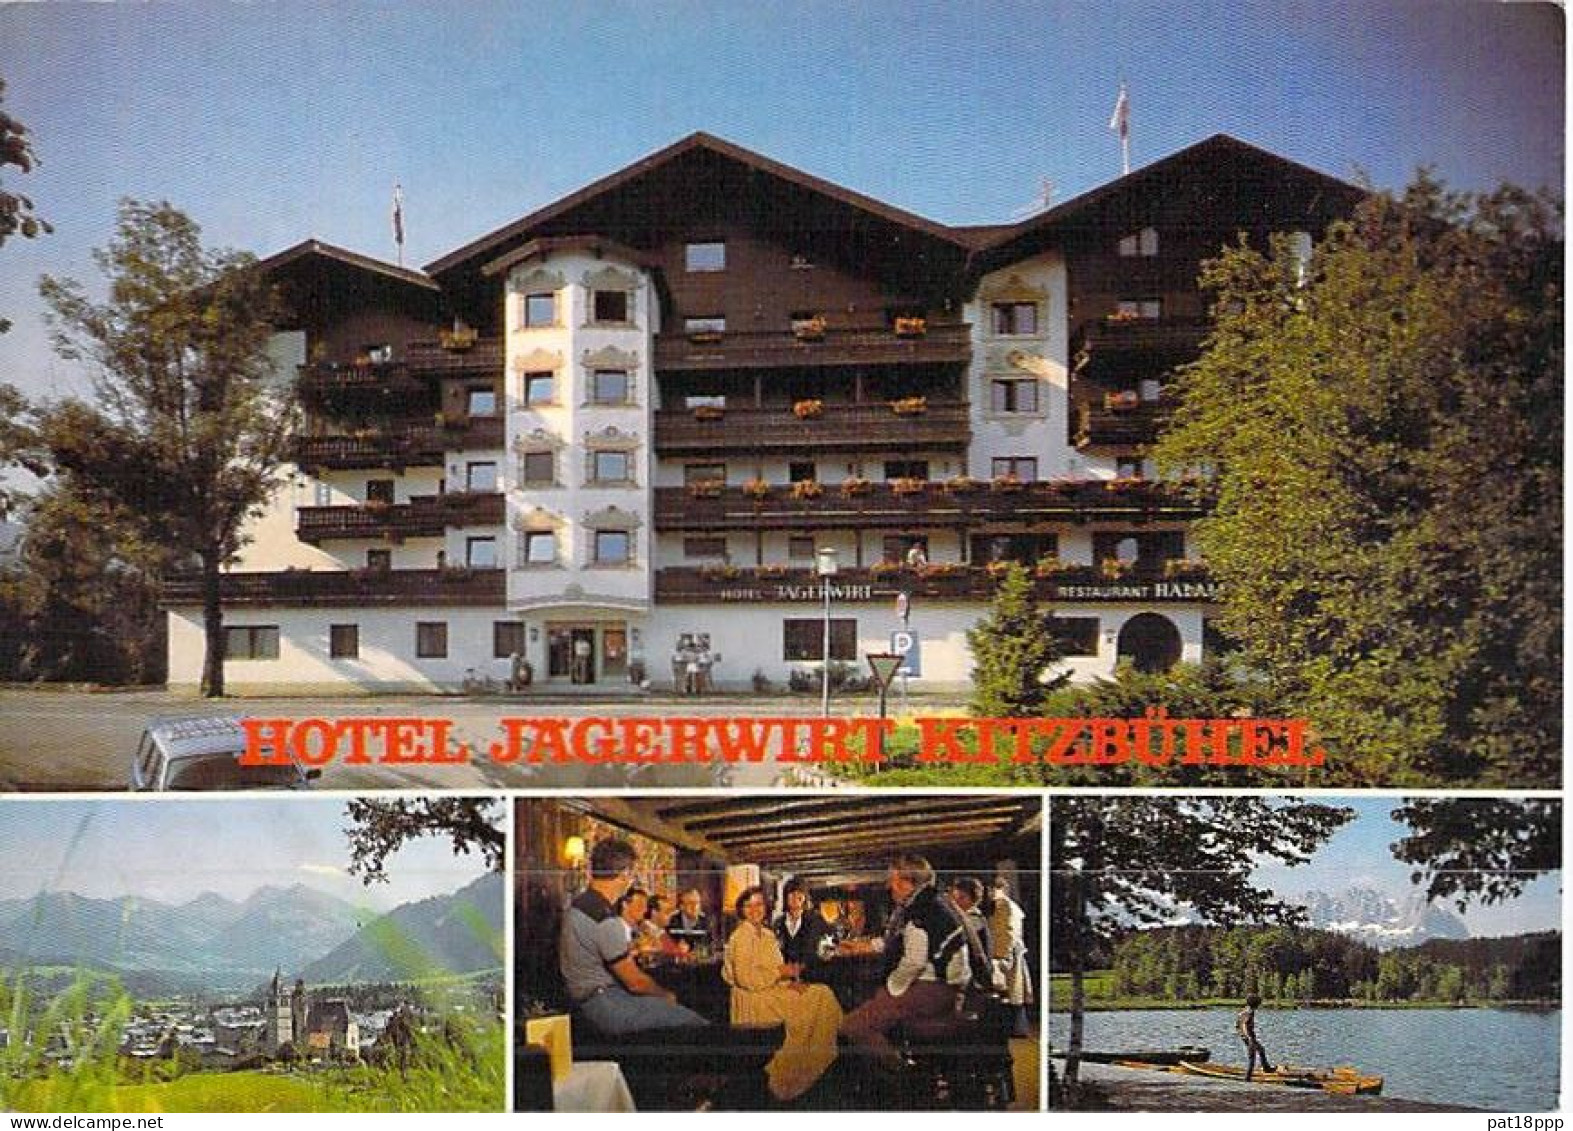 ÖSTERREICH Autriche - Lot de 45 CPSM GF HOTEL RESTAURANT : TIROL TYROL (0.11 € / carte) Austria Oostenrijk